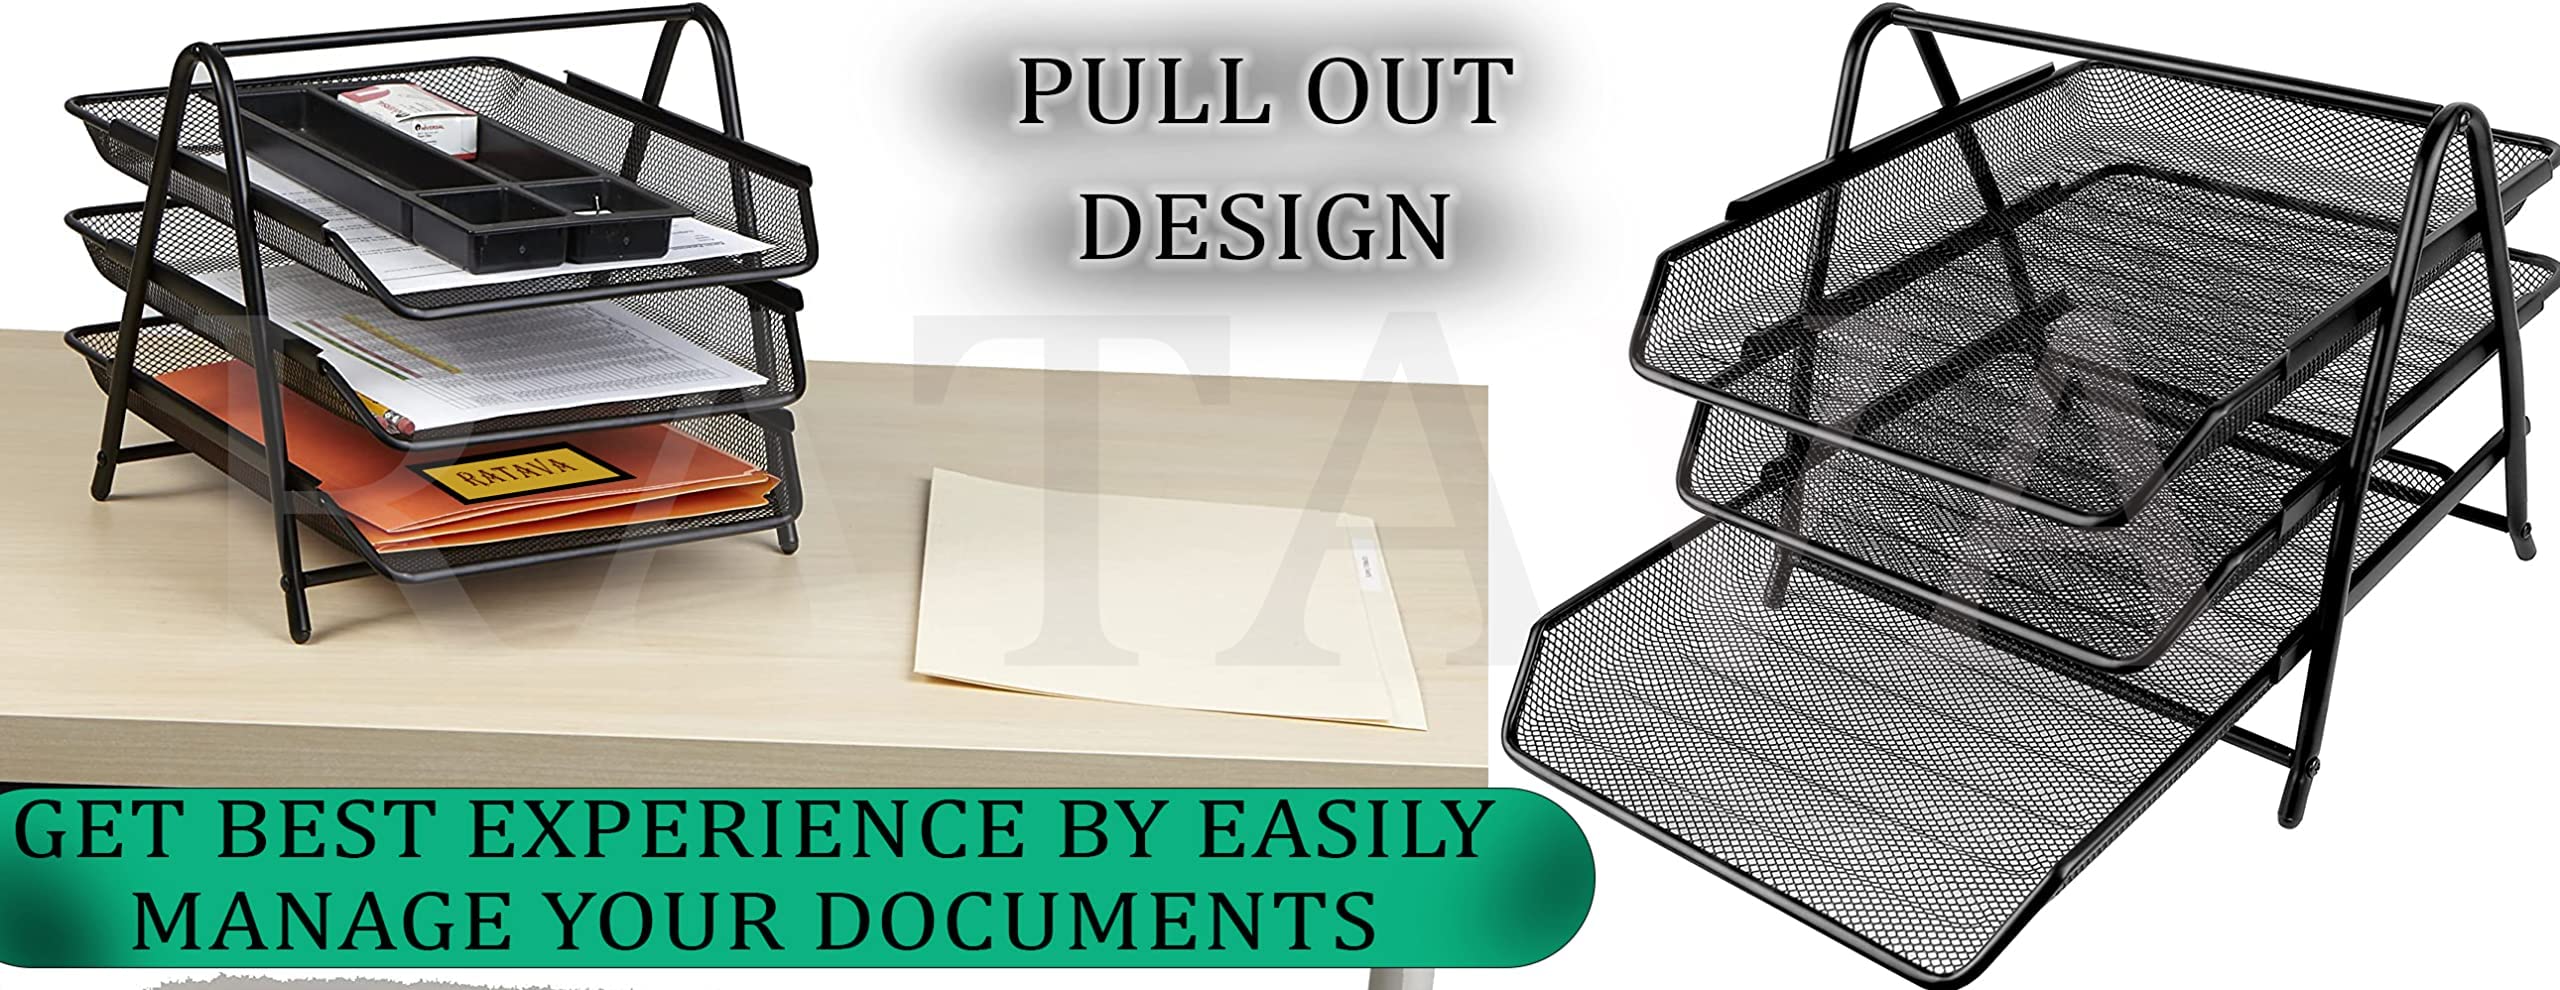 VIO 3 Tier Document, File, Paper, Letter, Office, Desktop Tray Organizer 3 Desk File Tray, 3 Tier Metal Mesh A4 Files Documents Papers Folders Holder Desk Organizer –(Black)